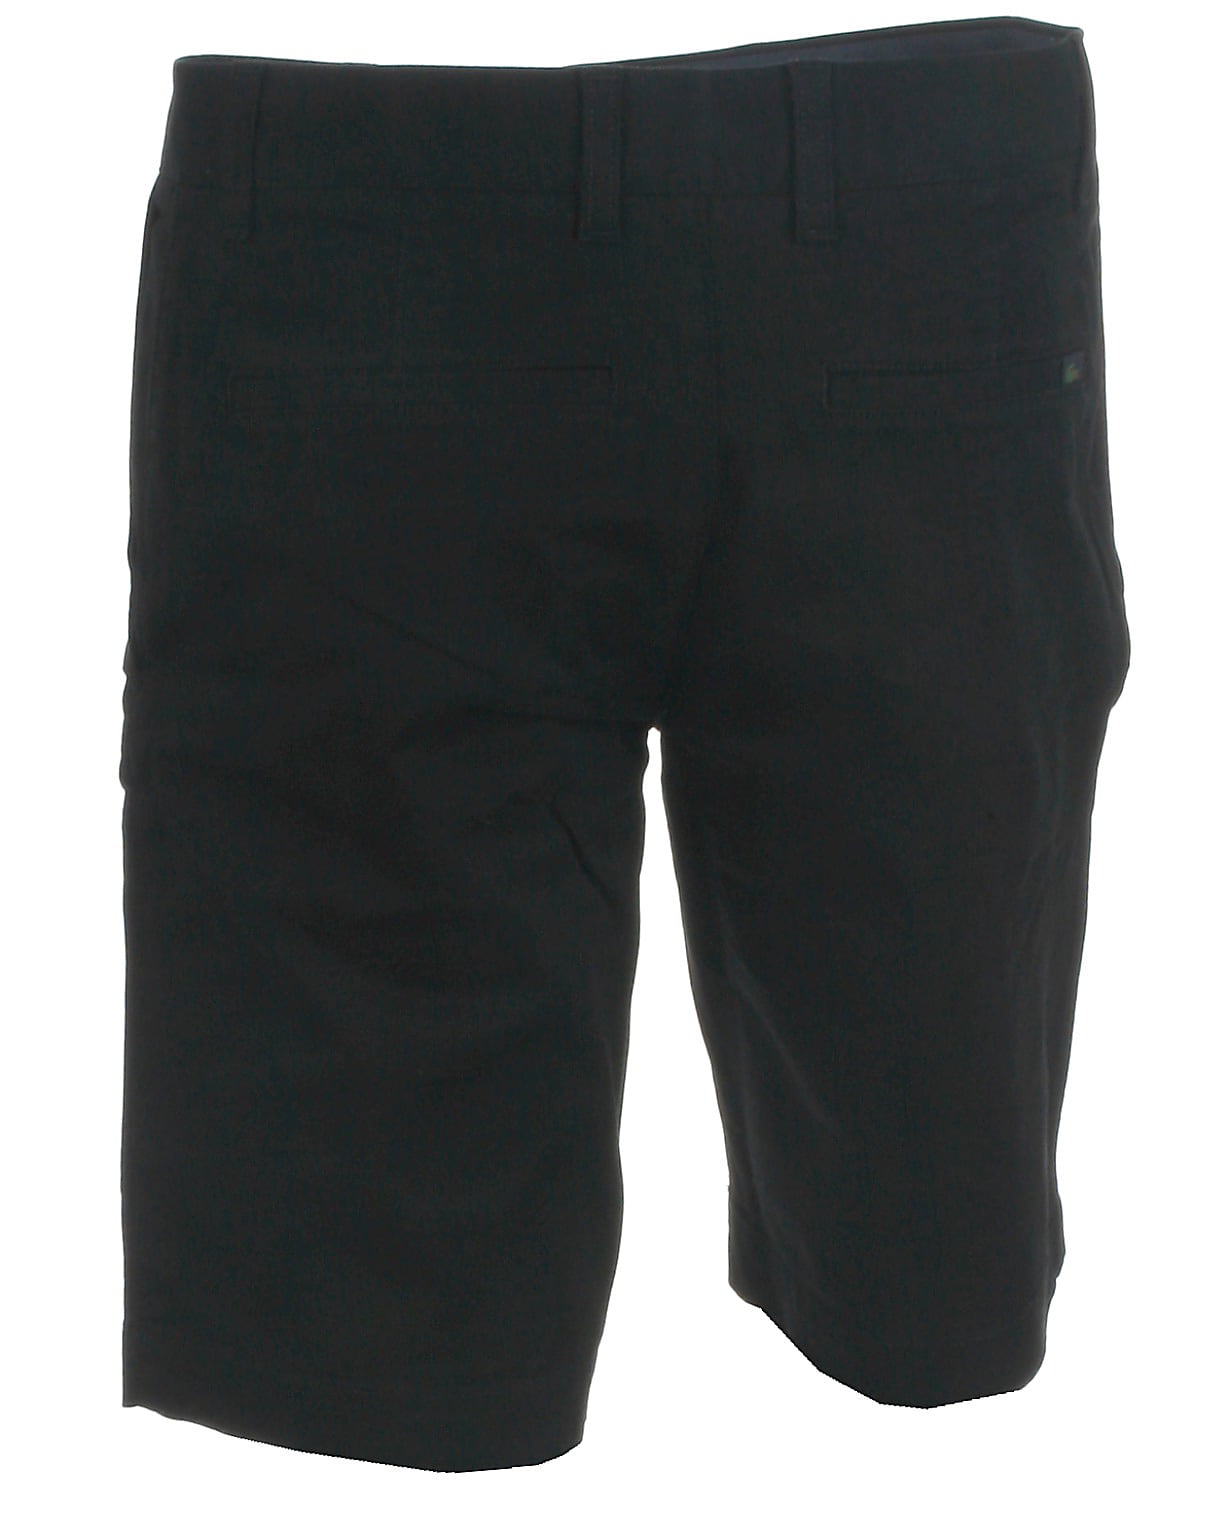 Se Lacoste chino shorts, sort - 188,L+,42 hos Umame.dk